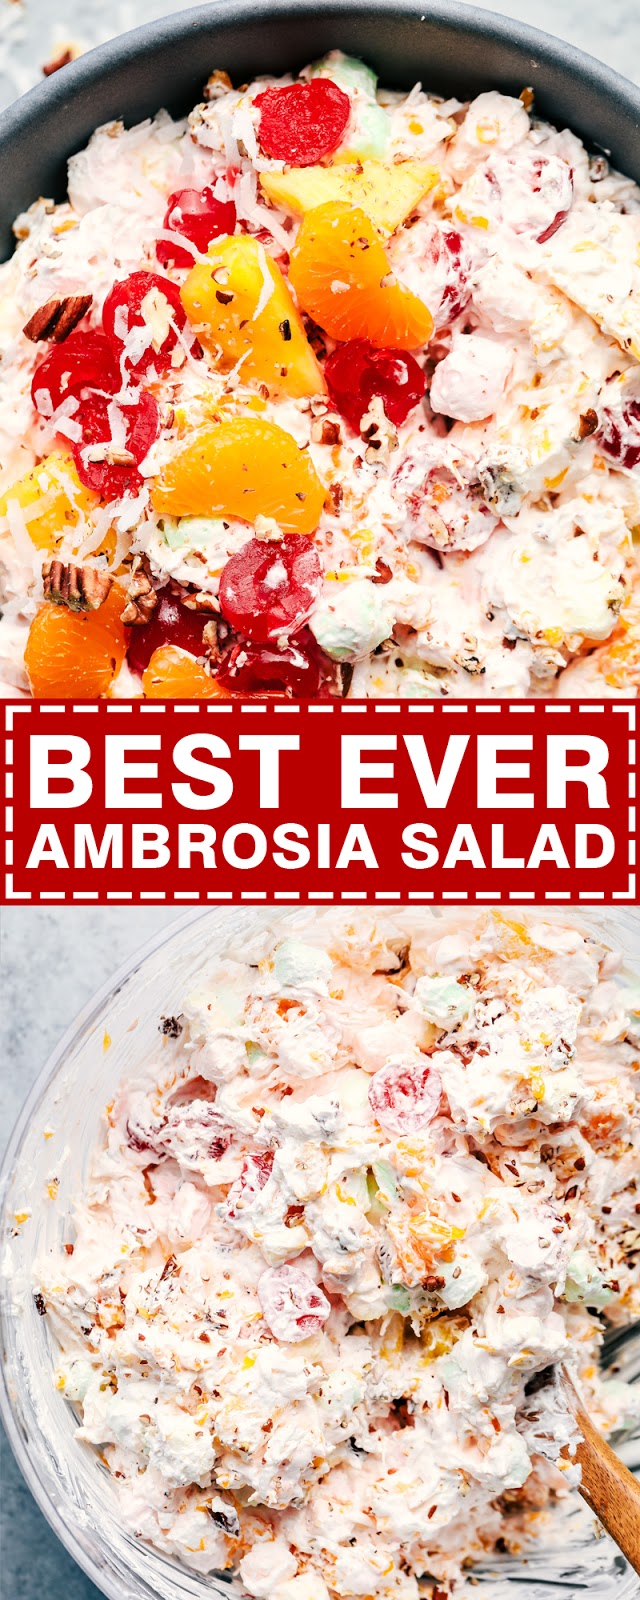 BEST EVER AMBROSIA SALAD - Food Fun Kitchen